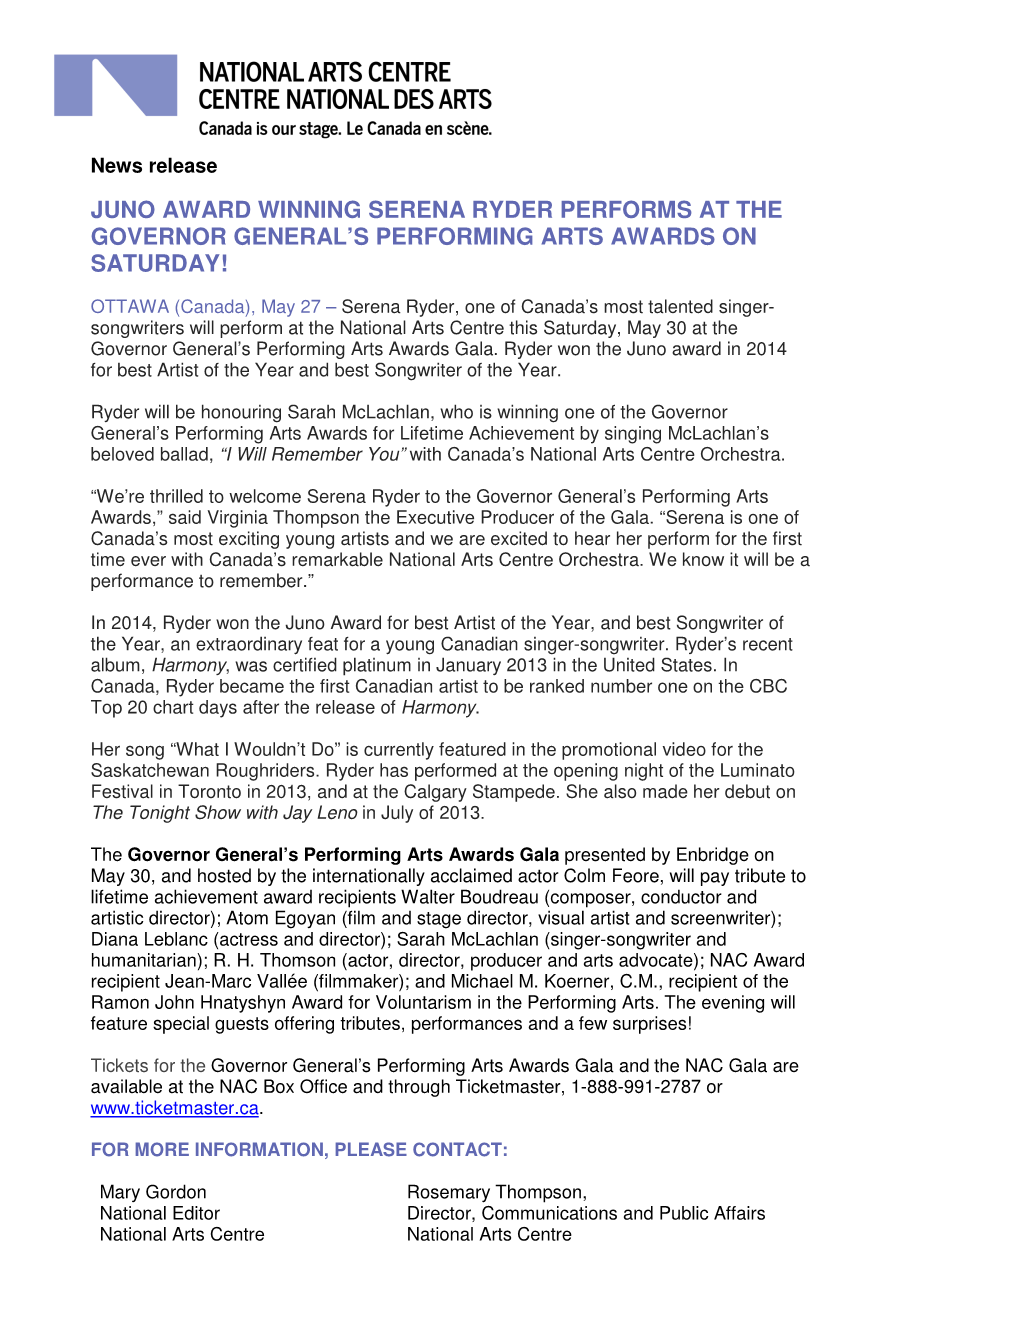 Juno Award Winning Serena Ryder Performs at the Governor General’S Performing Arts Awards on Saturday!